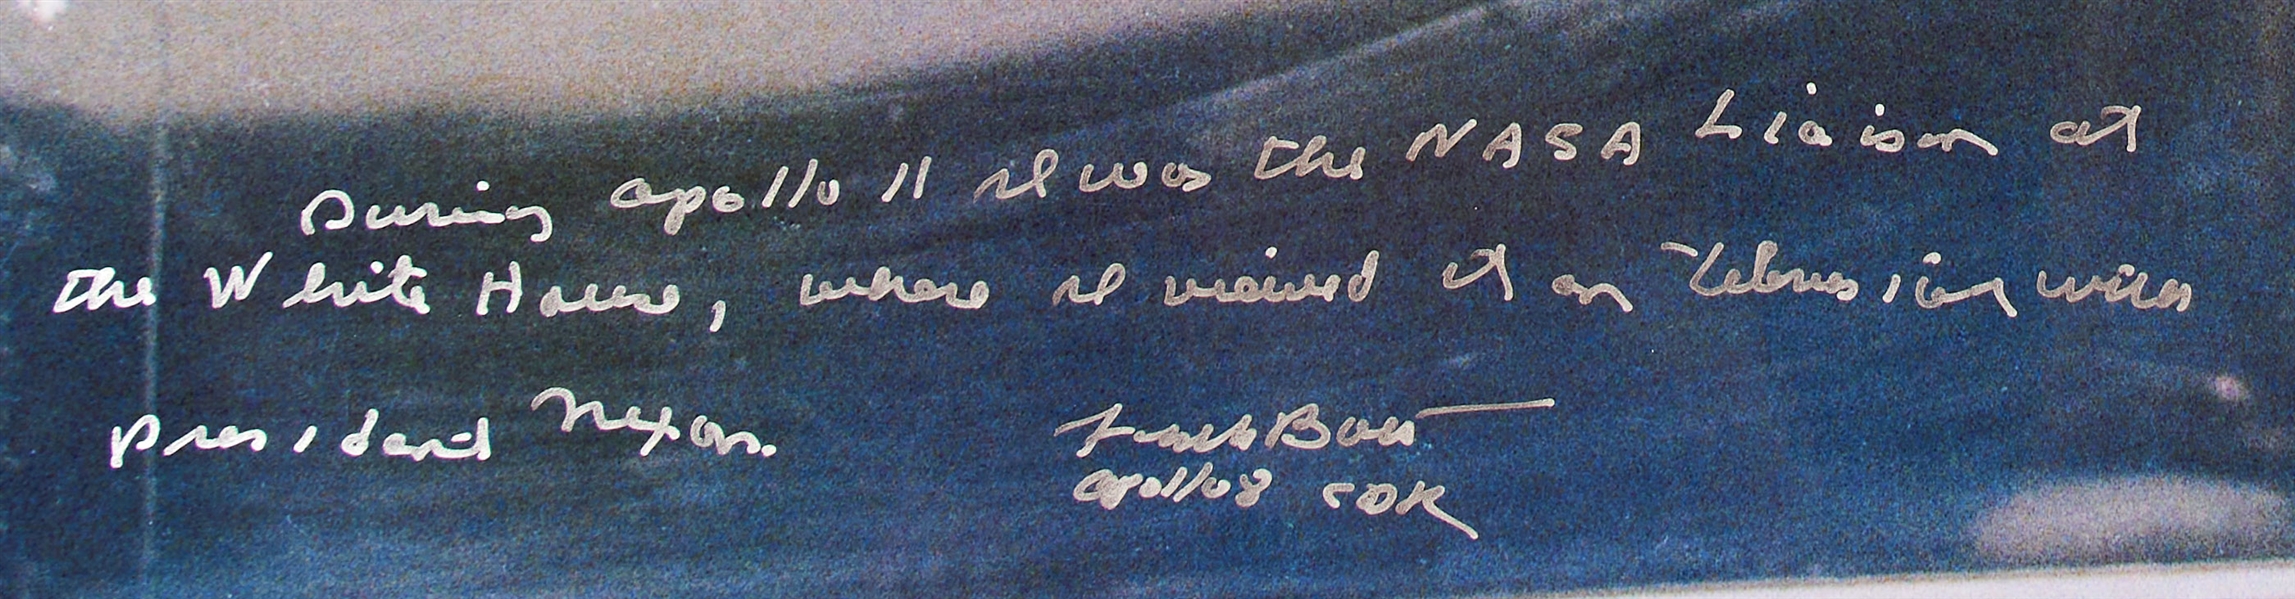 Frank Borman Signed 20'' x 16'' of Richard Nixon Visiting the Apollo 11 Crew in Quarantine -- Borman Writes that He Watched the Apollo 11 Moon Landing with Nixon